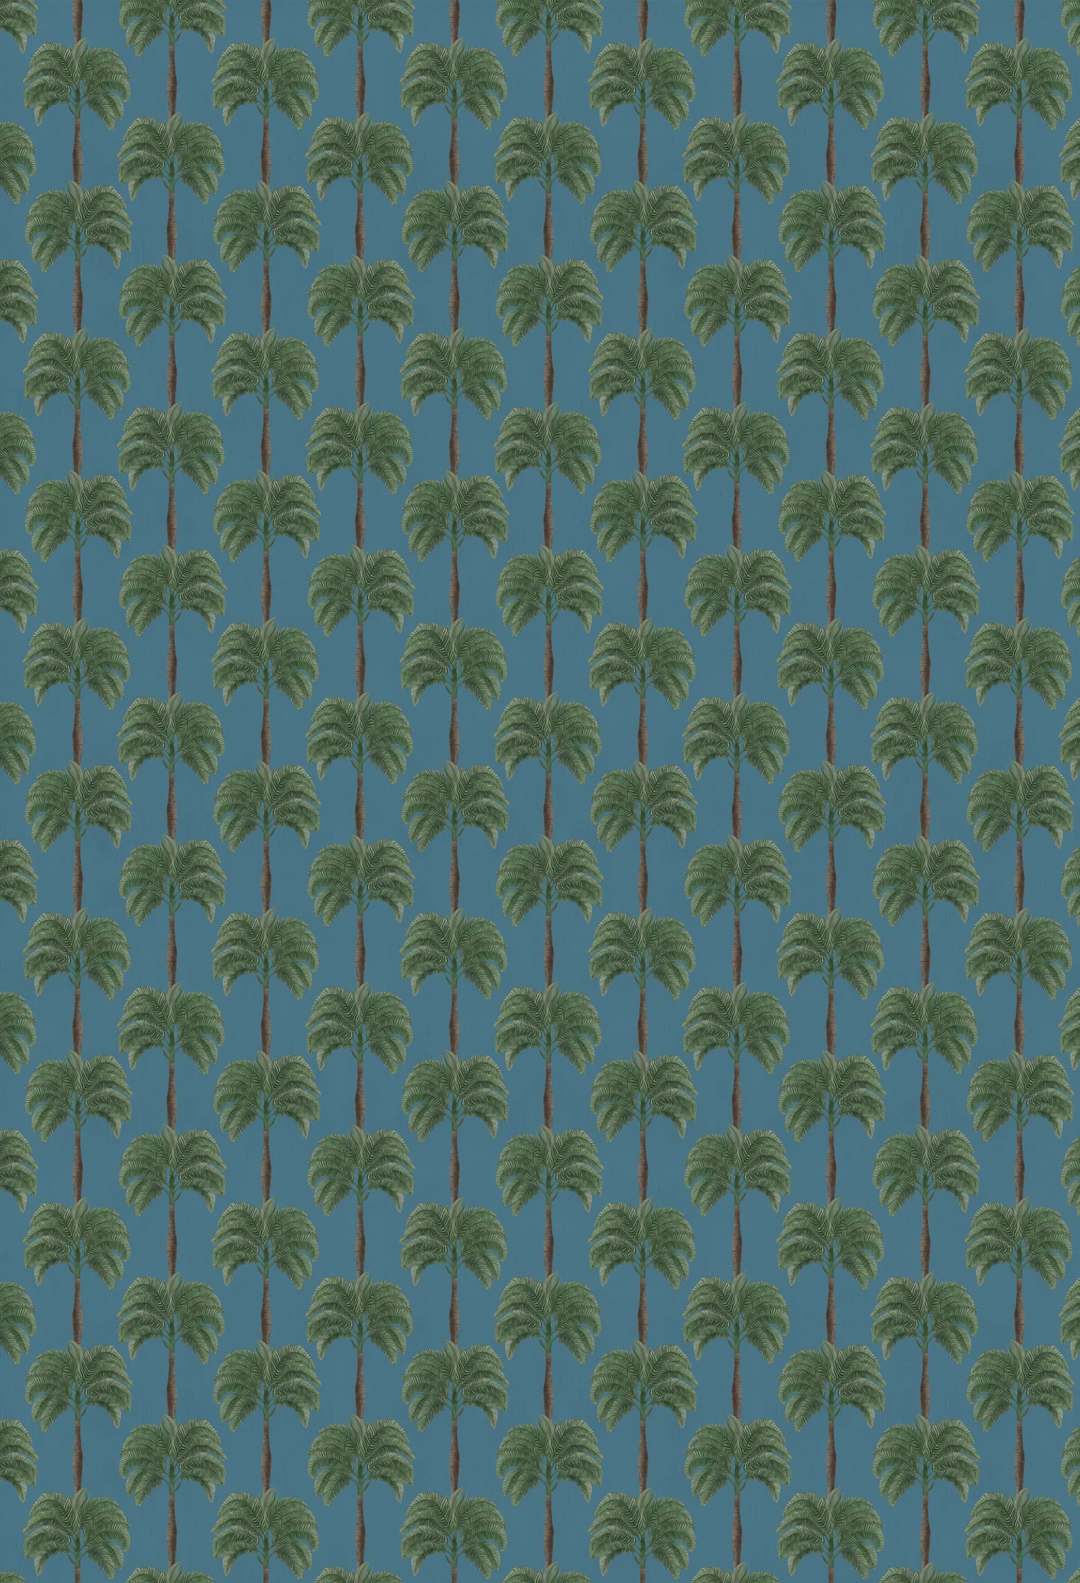 Deus-ex-gardenia-Palma-wallpaper-Palm-tree-repeat-lush-tropical-stripe-palm-tree-Bay-teal-background-hand-illustrated-wallpaper-pattern